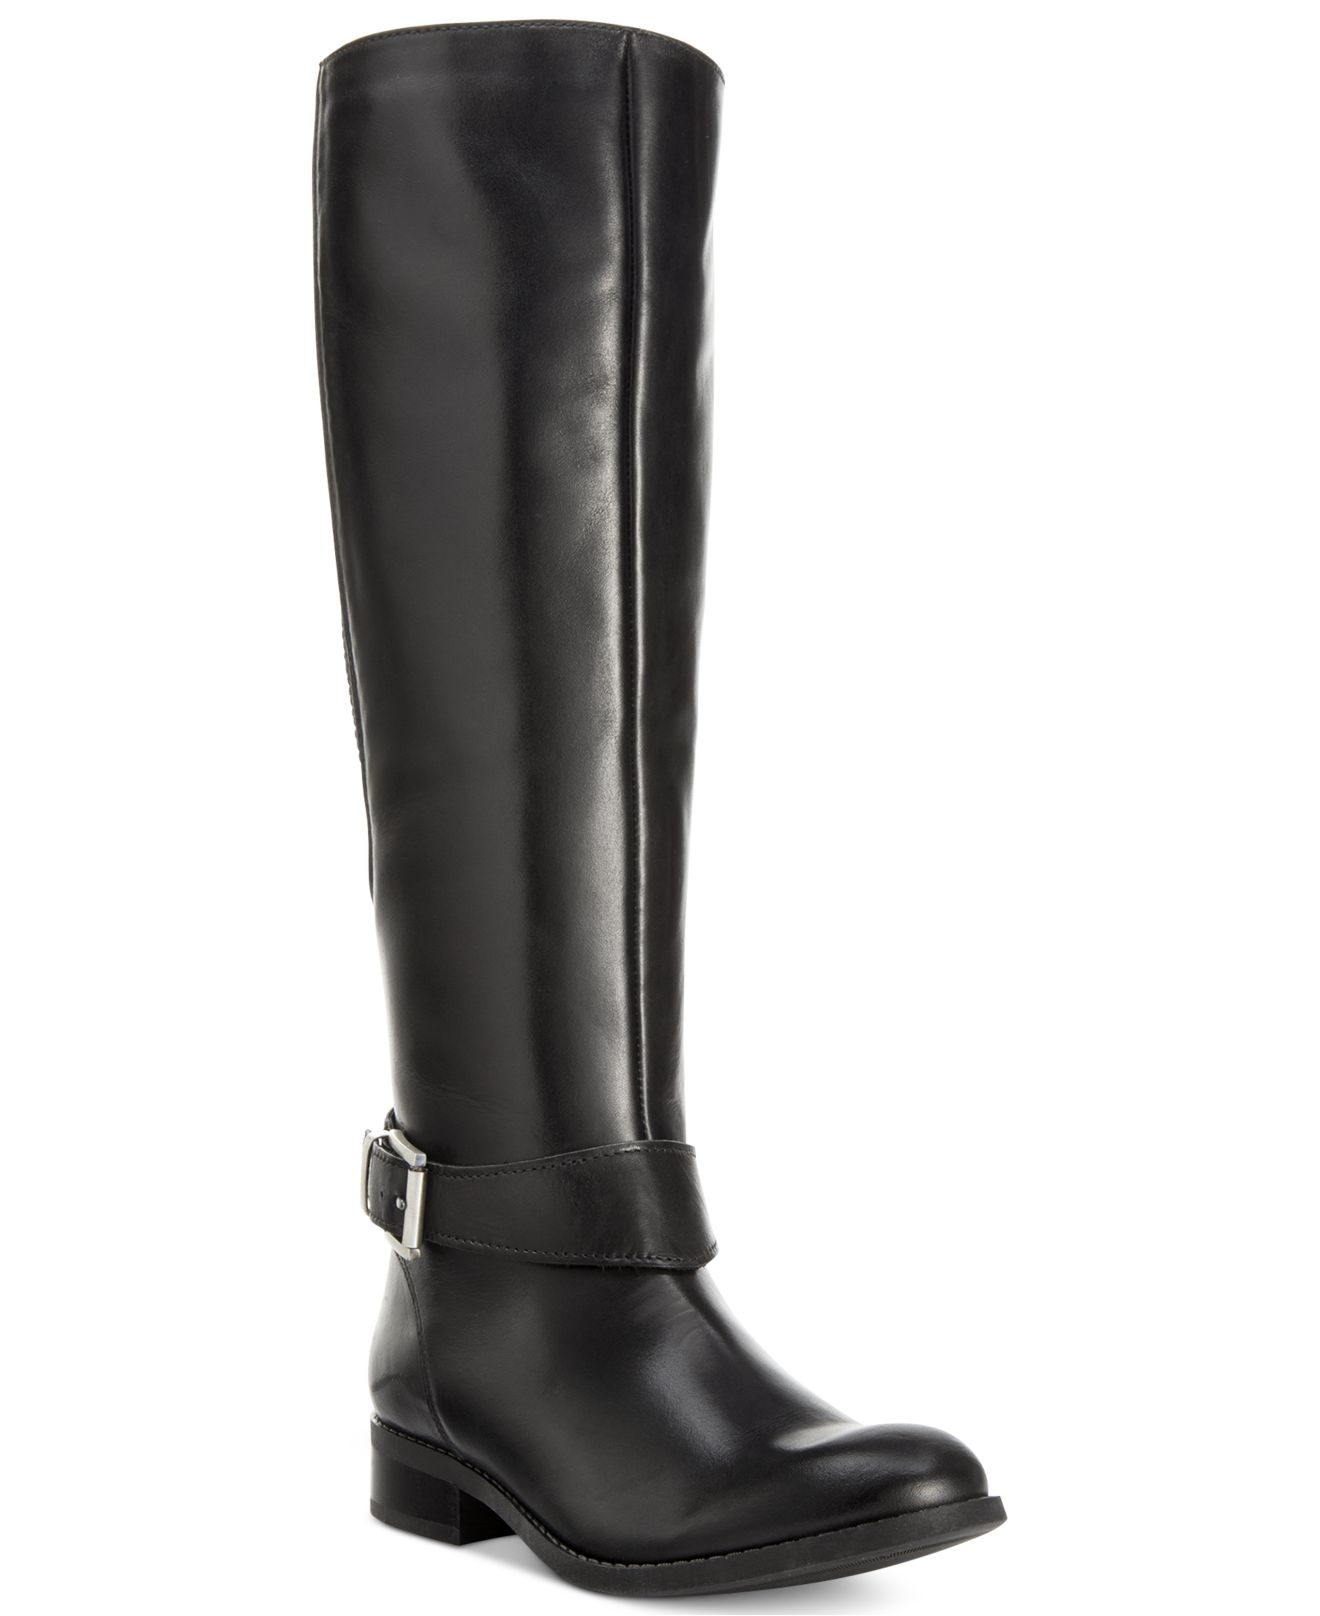 Lyst - Clarks Artisan Women's Pita Dakota Tall Boots in Black